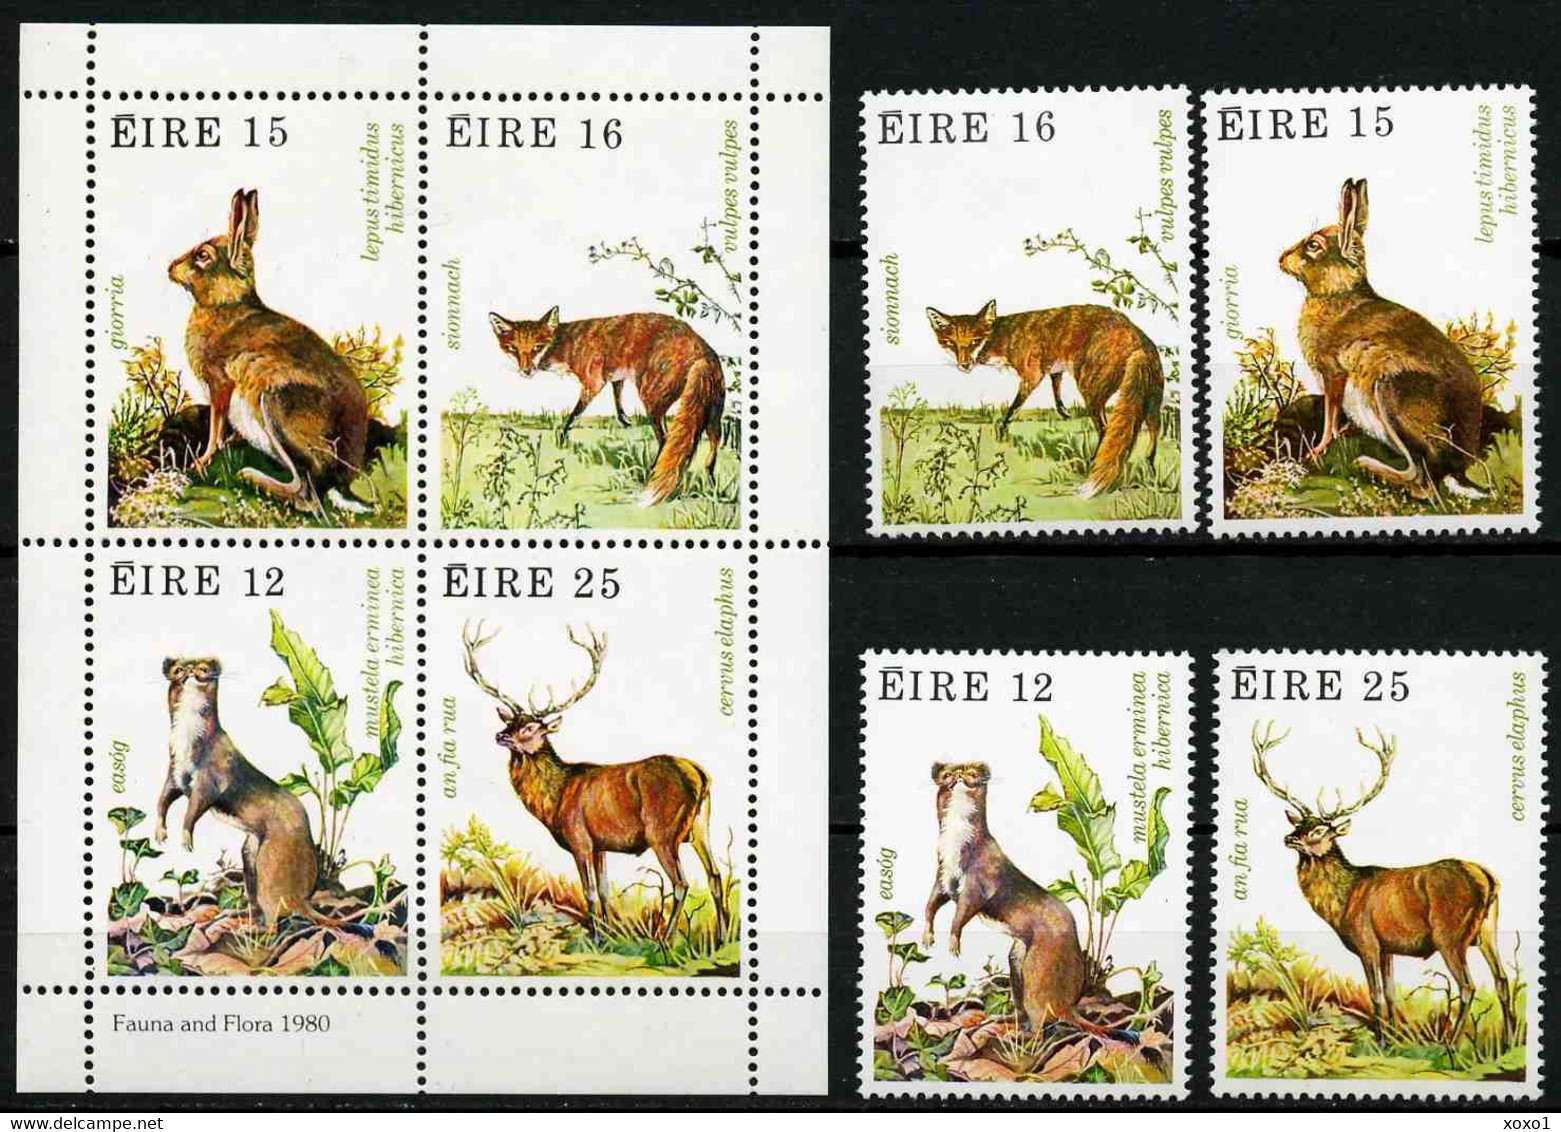 Ireland 1980 MiNr. 421 - 424 (Block 3) Irland Animals 4v+1bl MNH** 6,50 € - Roedores